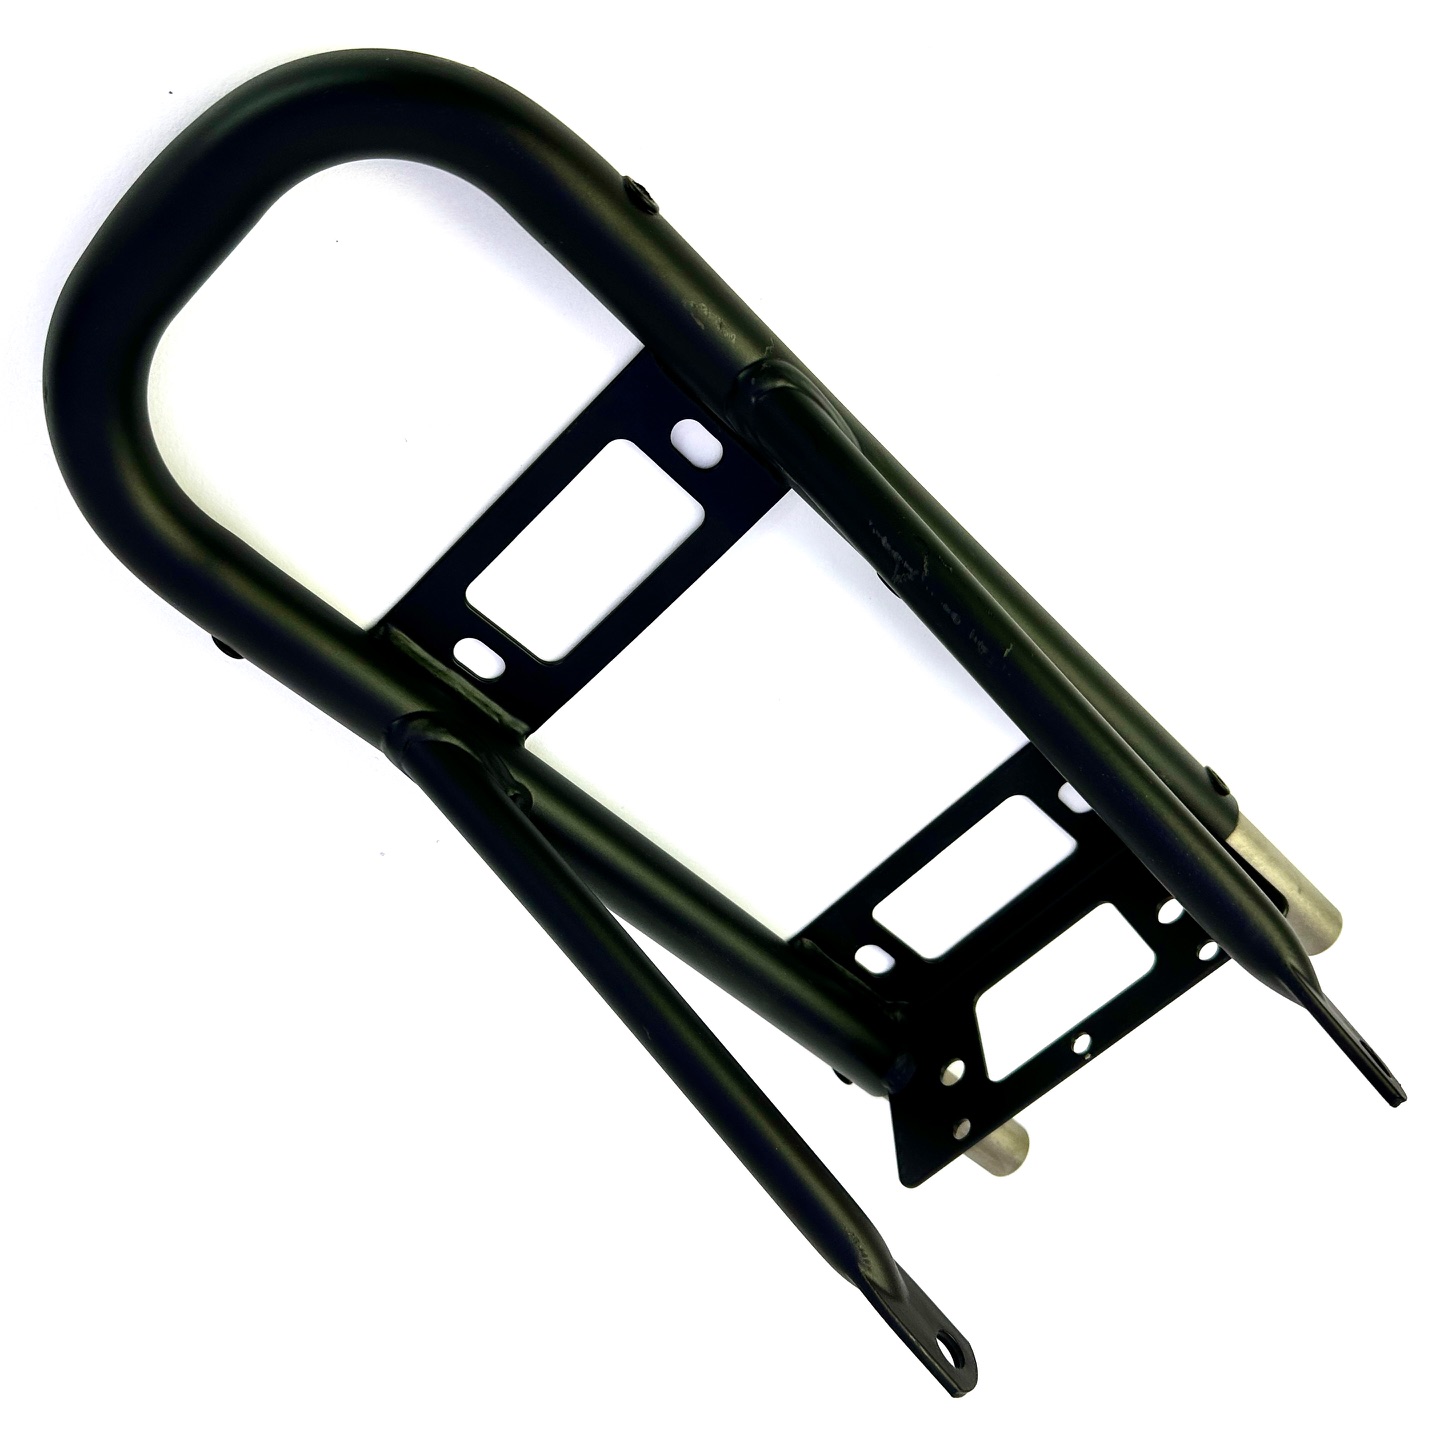 Seat extension / pillion seat / luggage rack for UNI MK, black